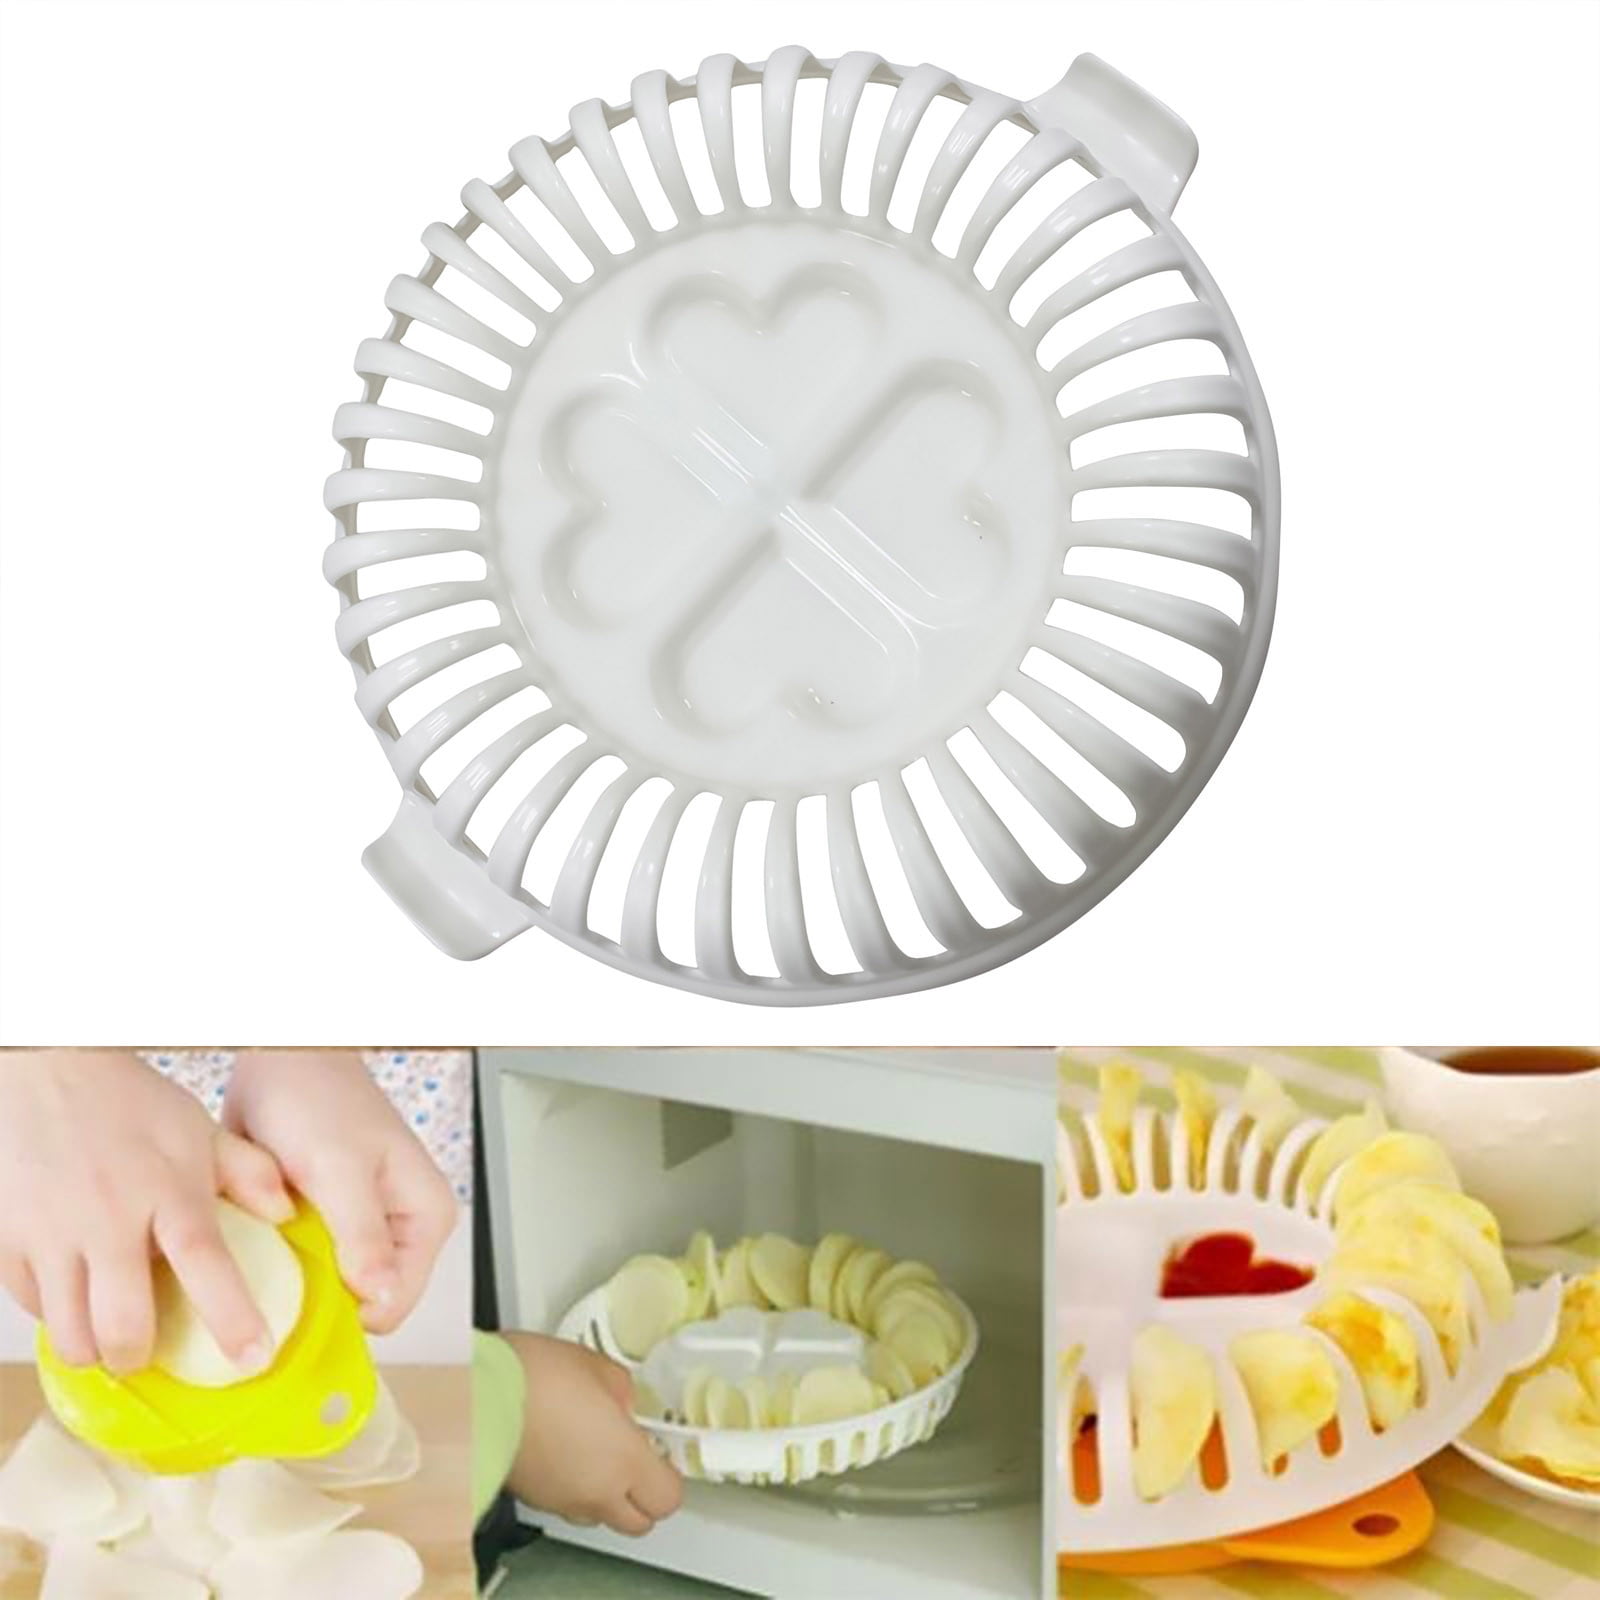 Wangxldd Microwave Potato Chip Maker Home Baking Tool Potato Chips Easy  Make Tool For Kitchen